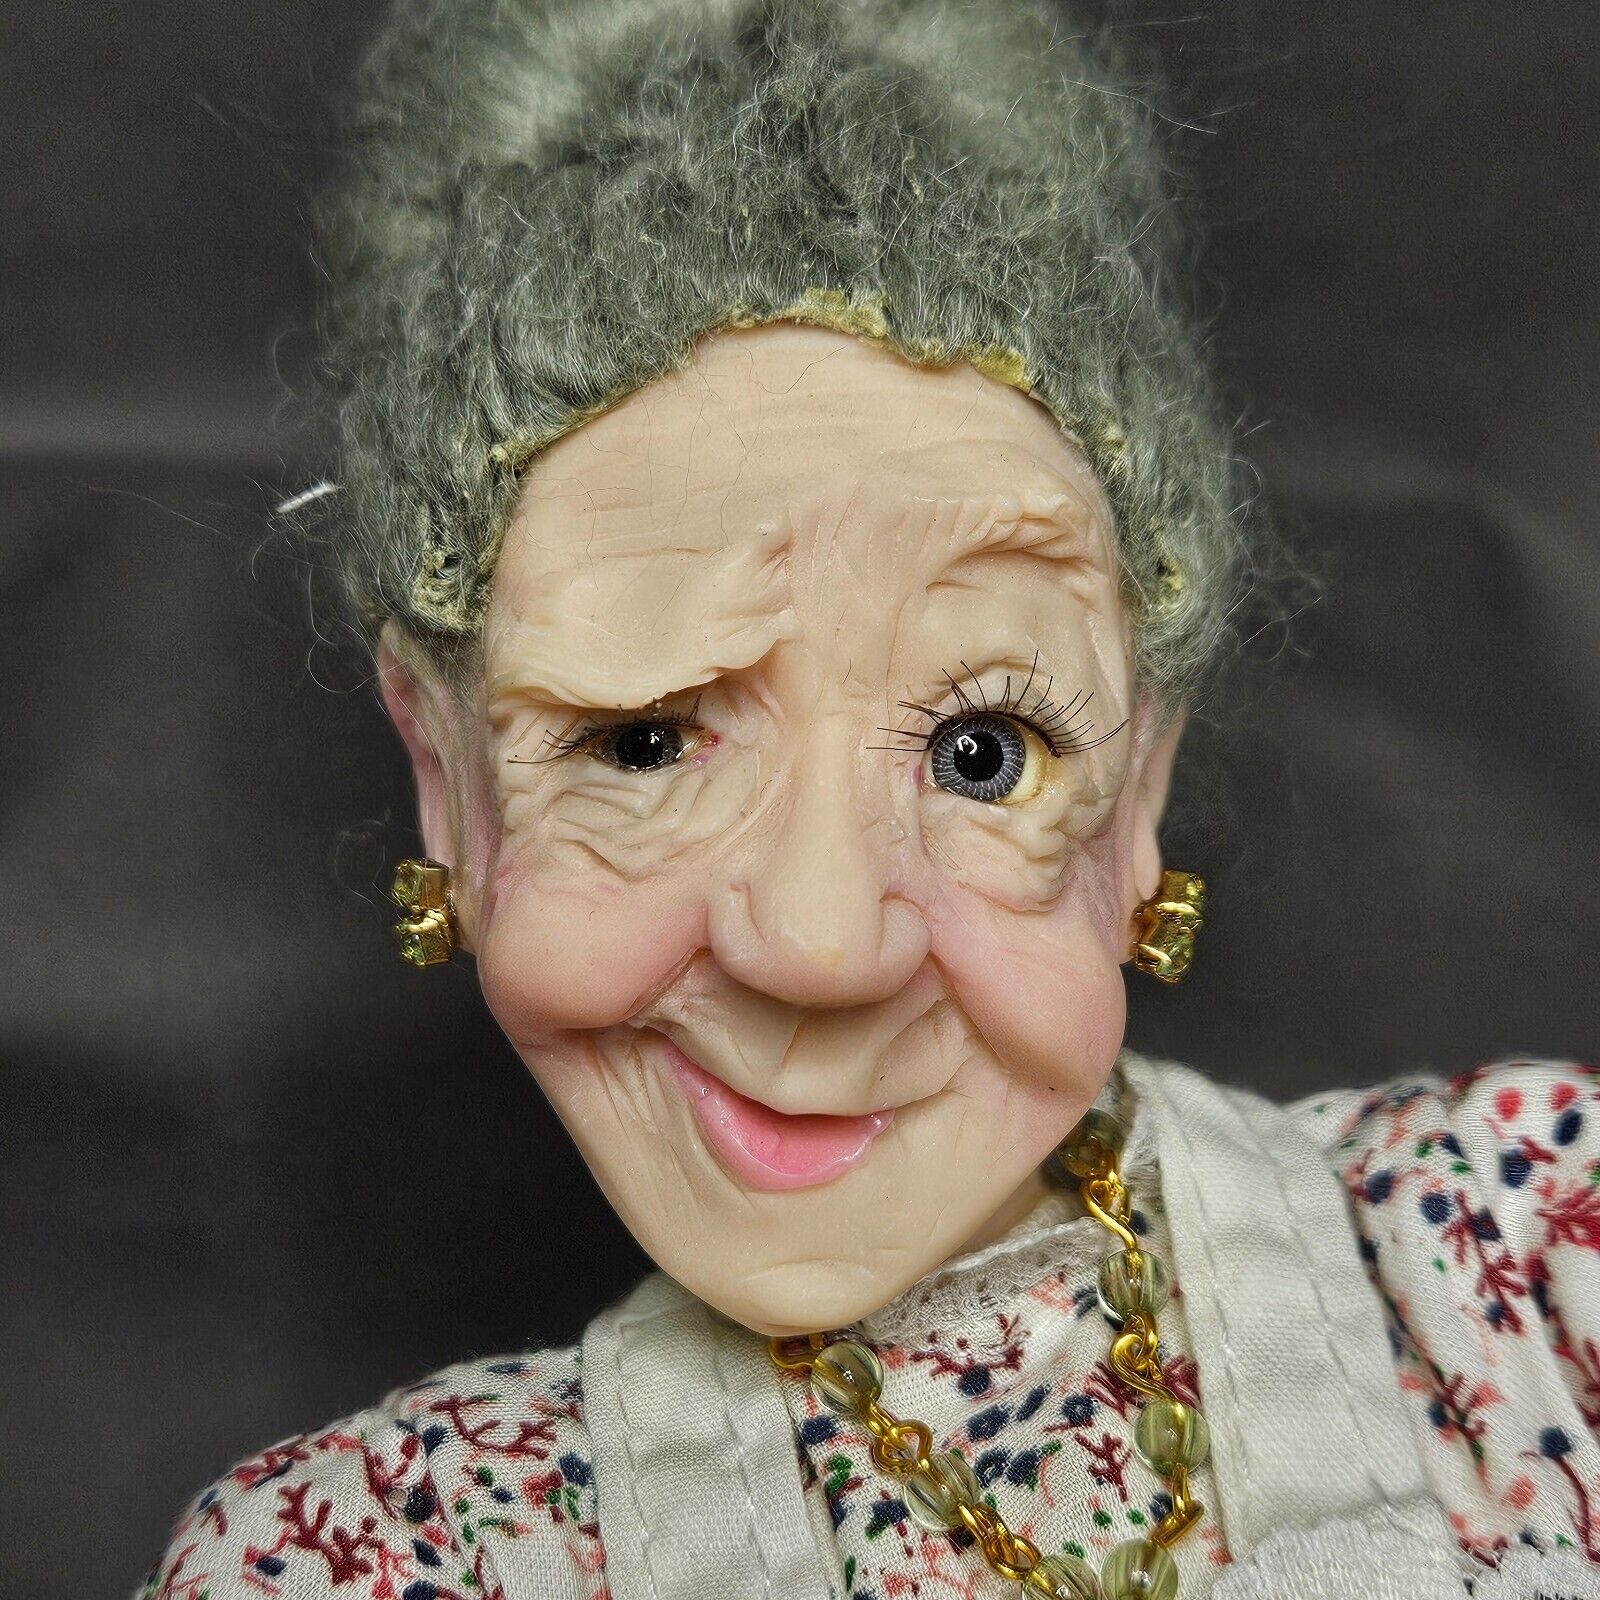 Jacqueline Kent Collection JKC Shelf Sitter Granny Old Woman Figure Slippers